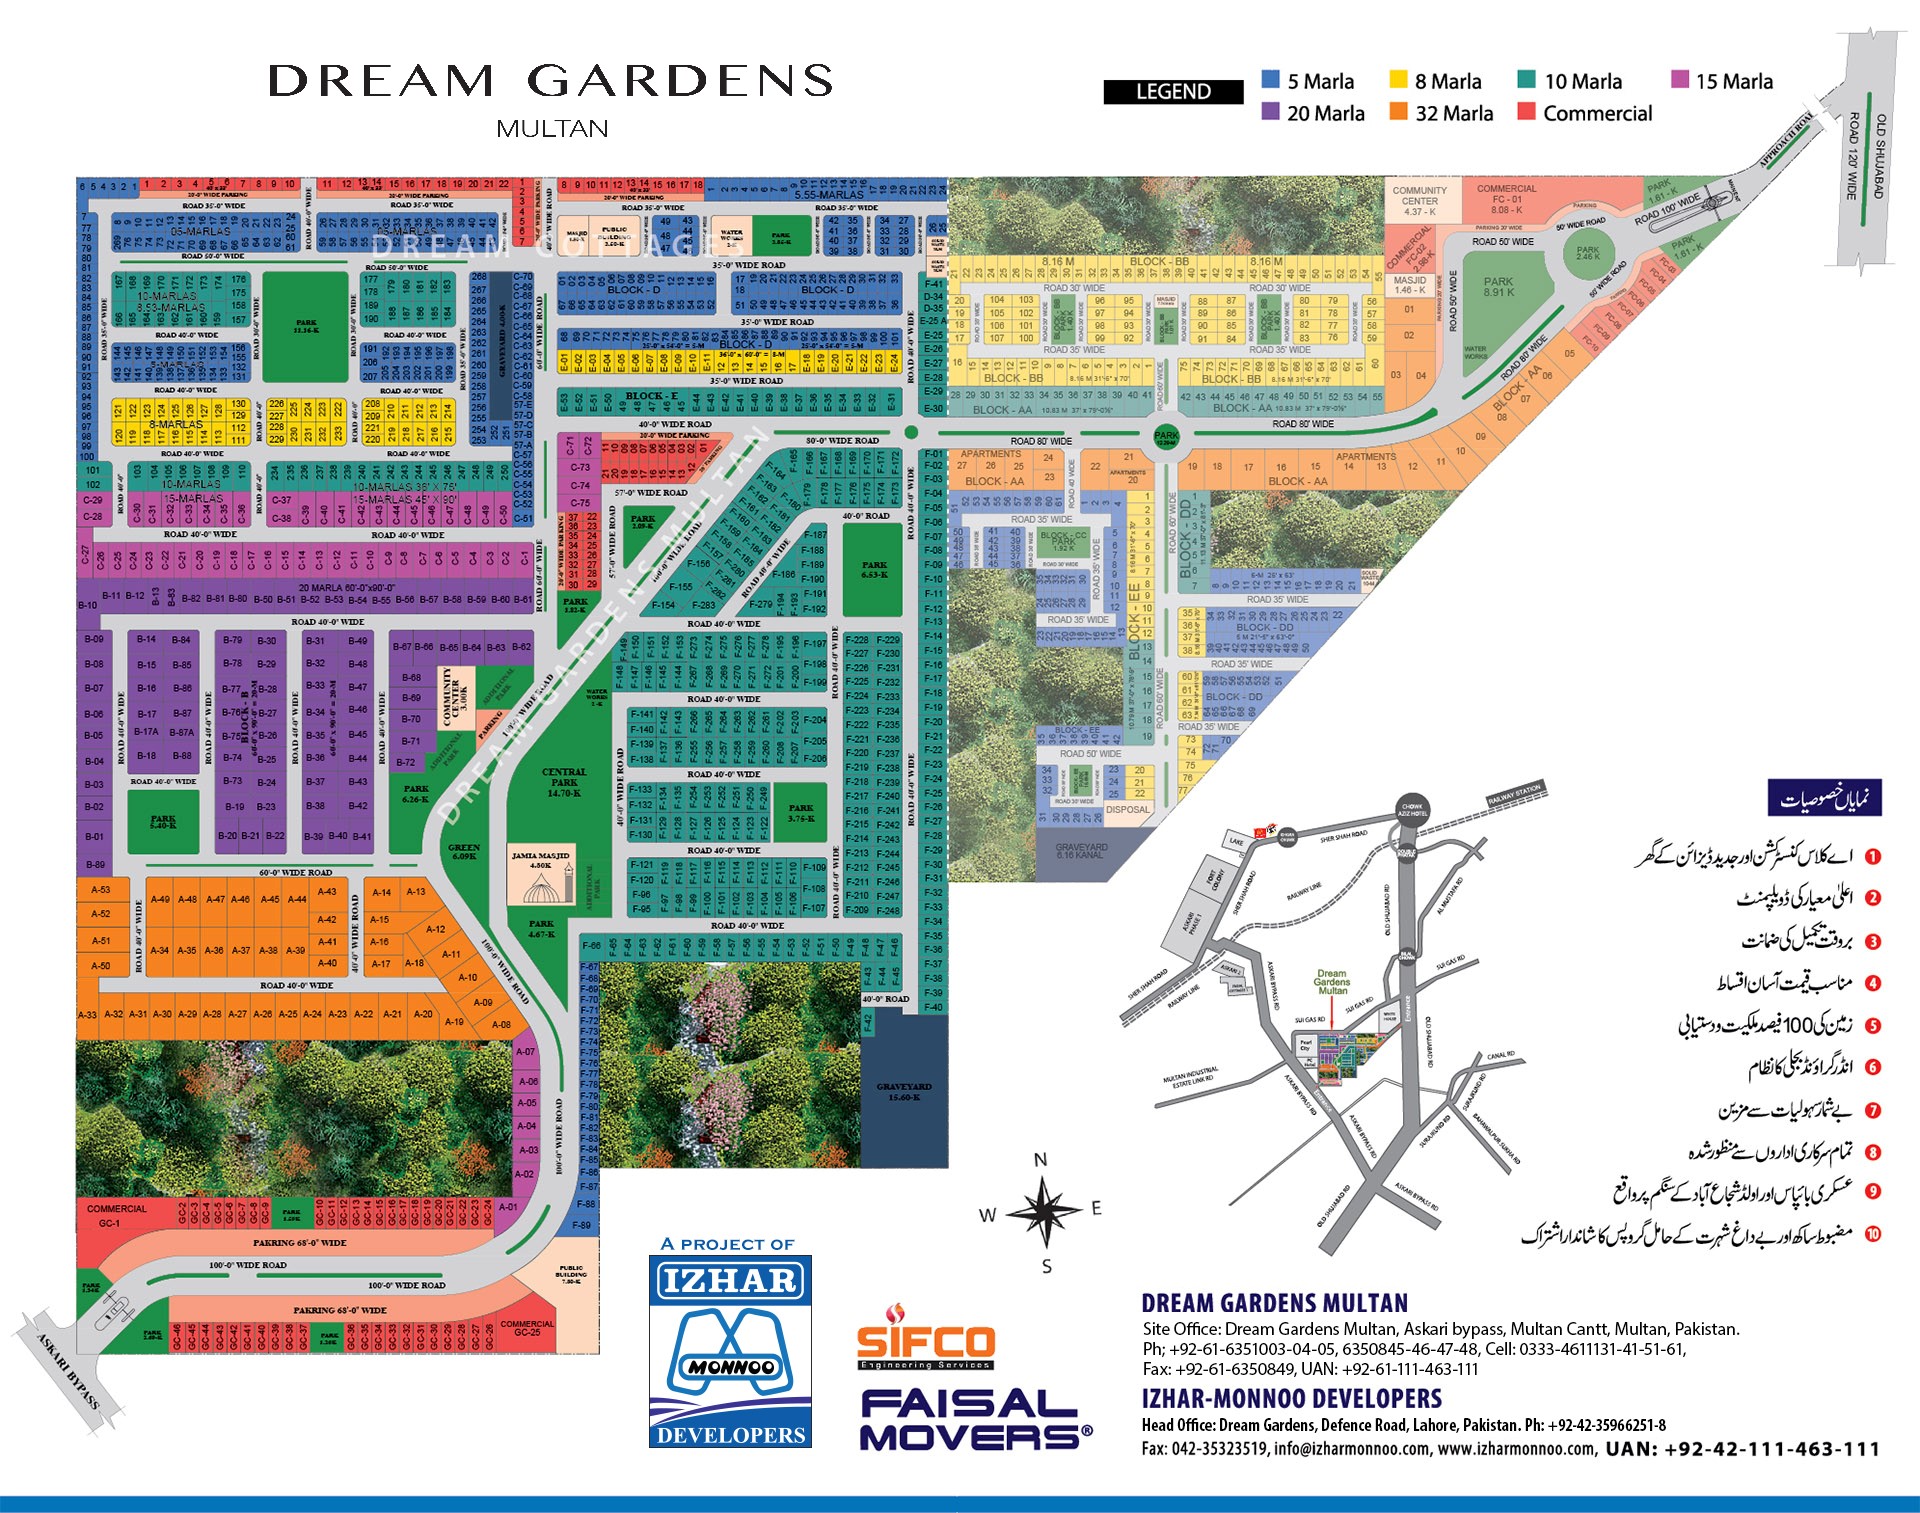 Dream Gardens Multan Master Plan